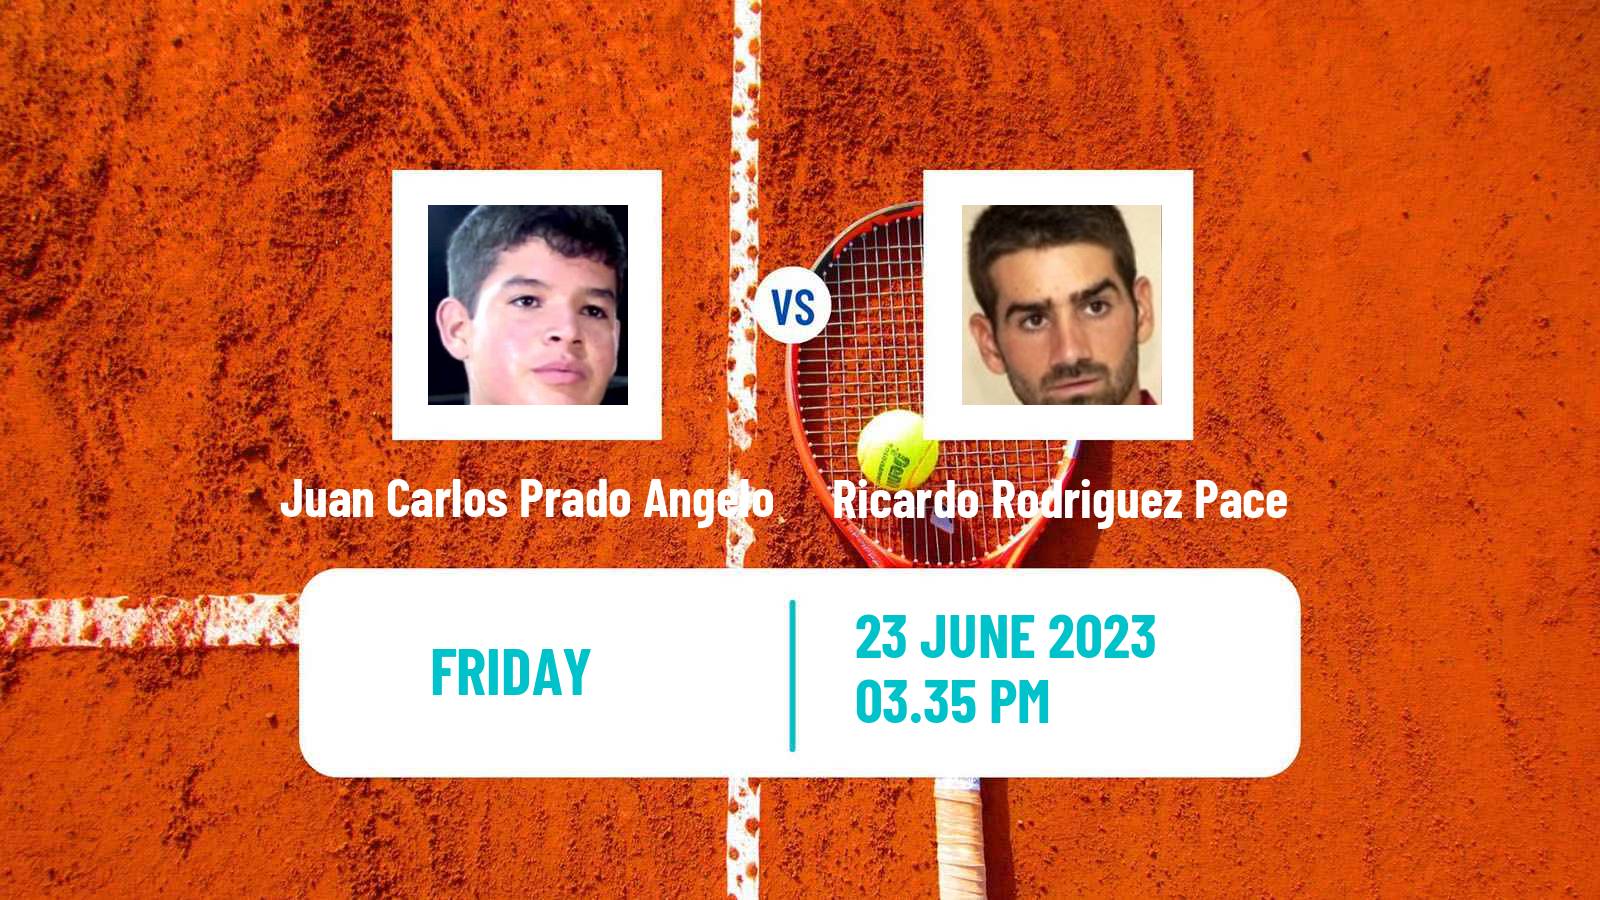 Tennis Davis Cup Group III Juan Carlos Prado Angelo - Ricardo Rodriguez Pace